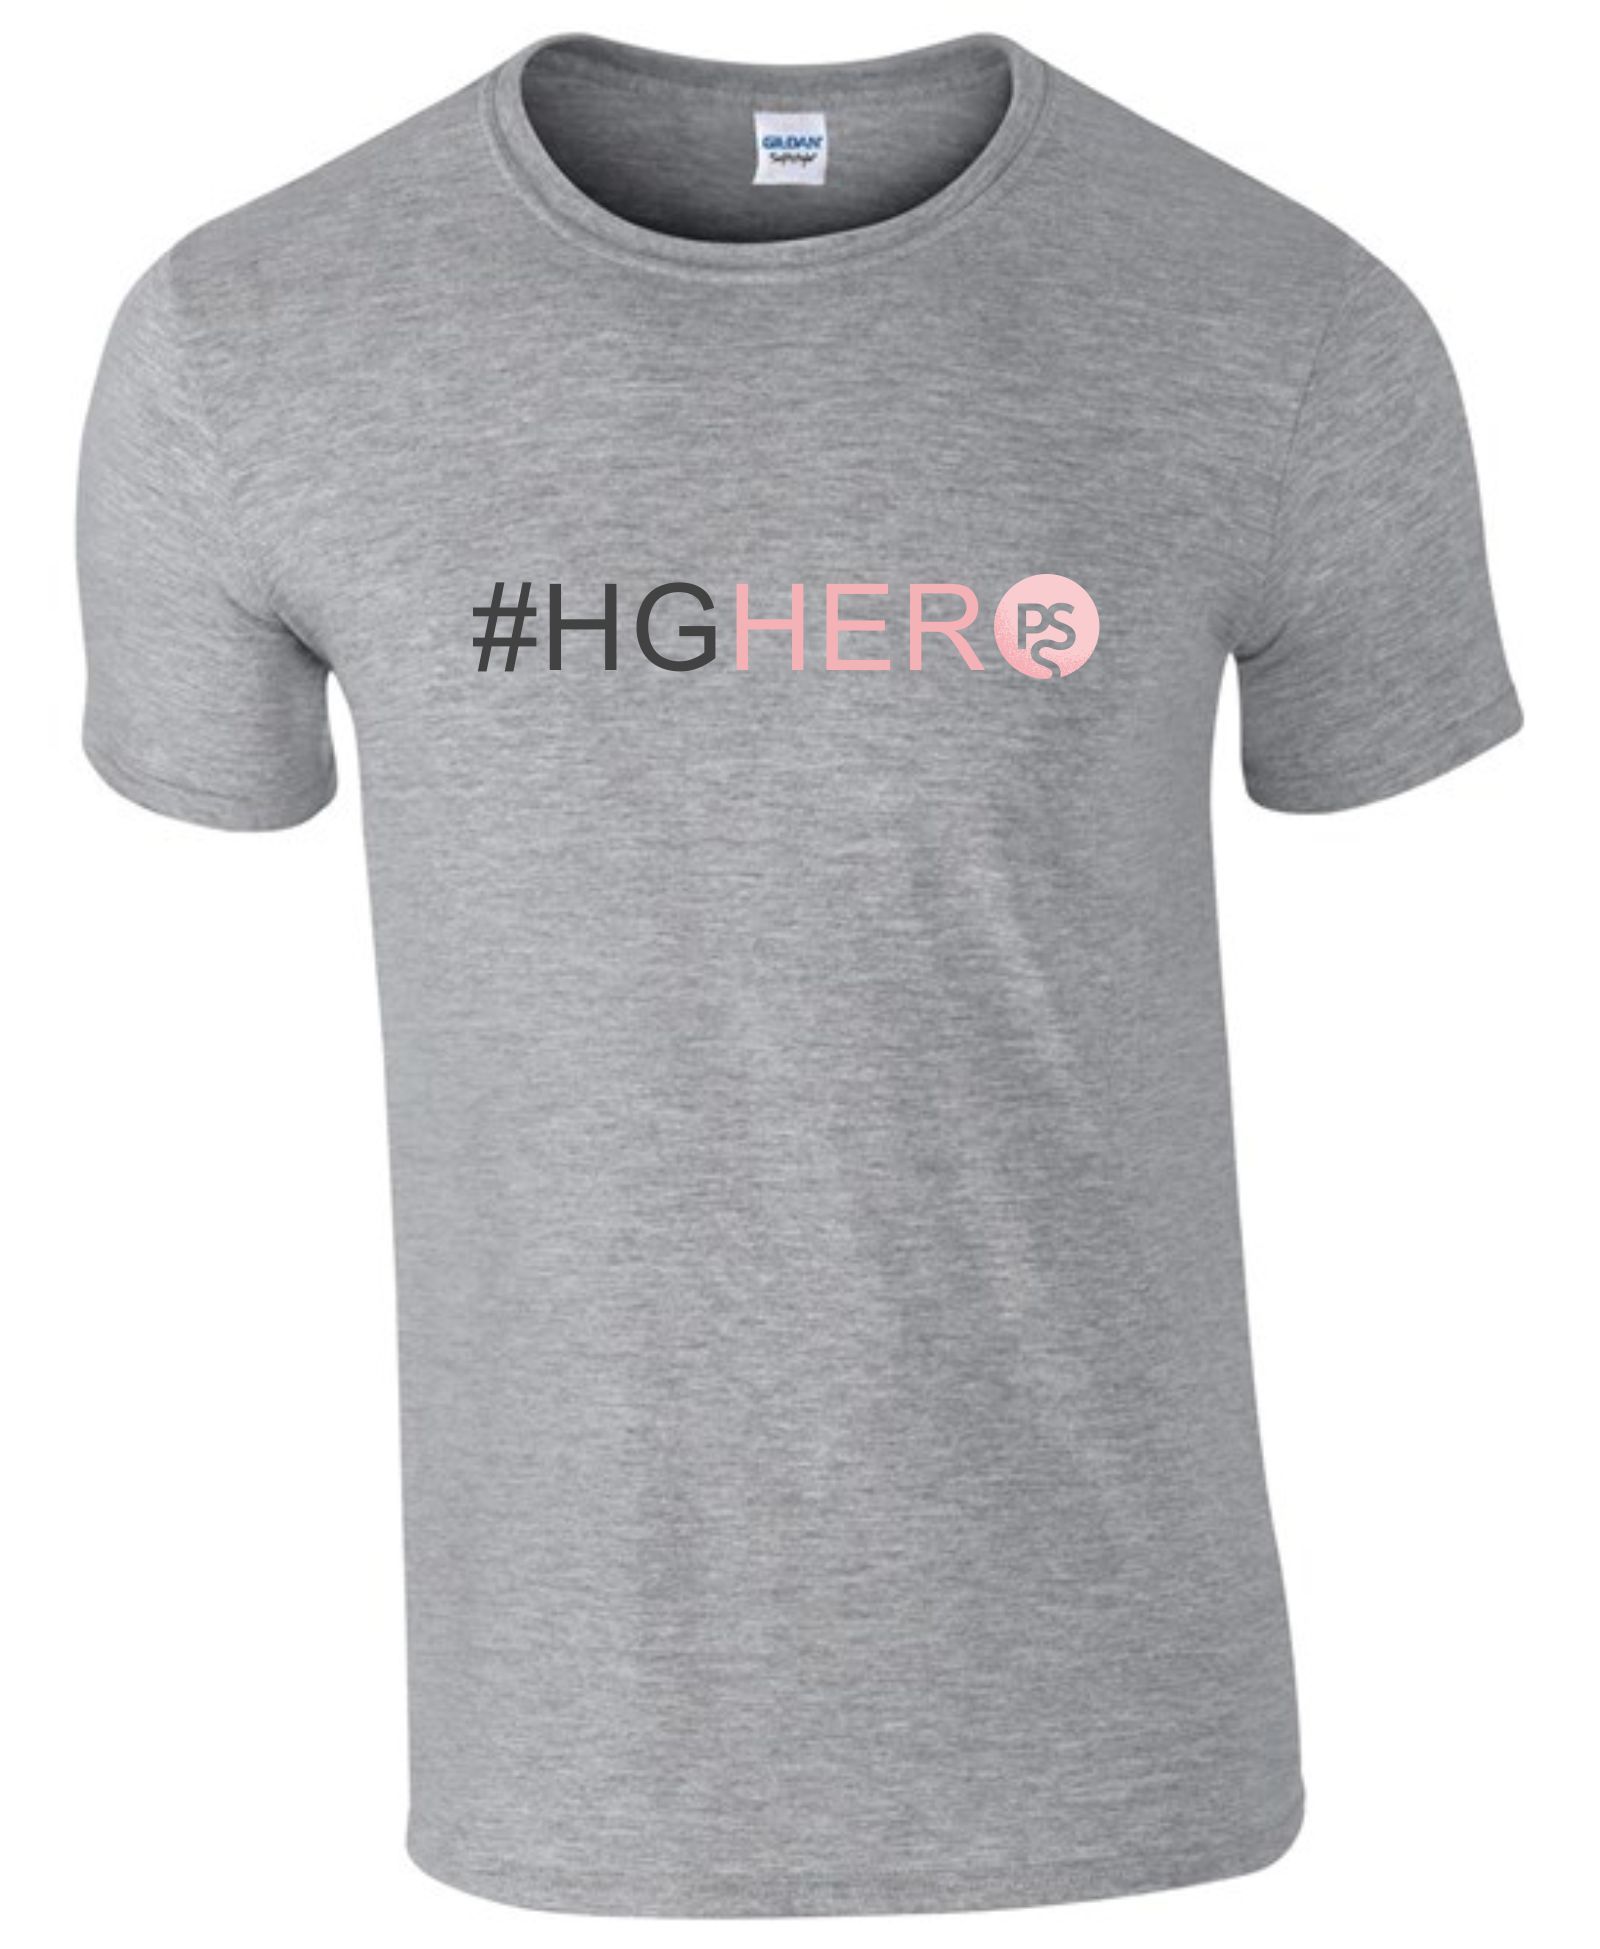 PSS #HGHero T-Shirt (Unisex)